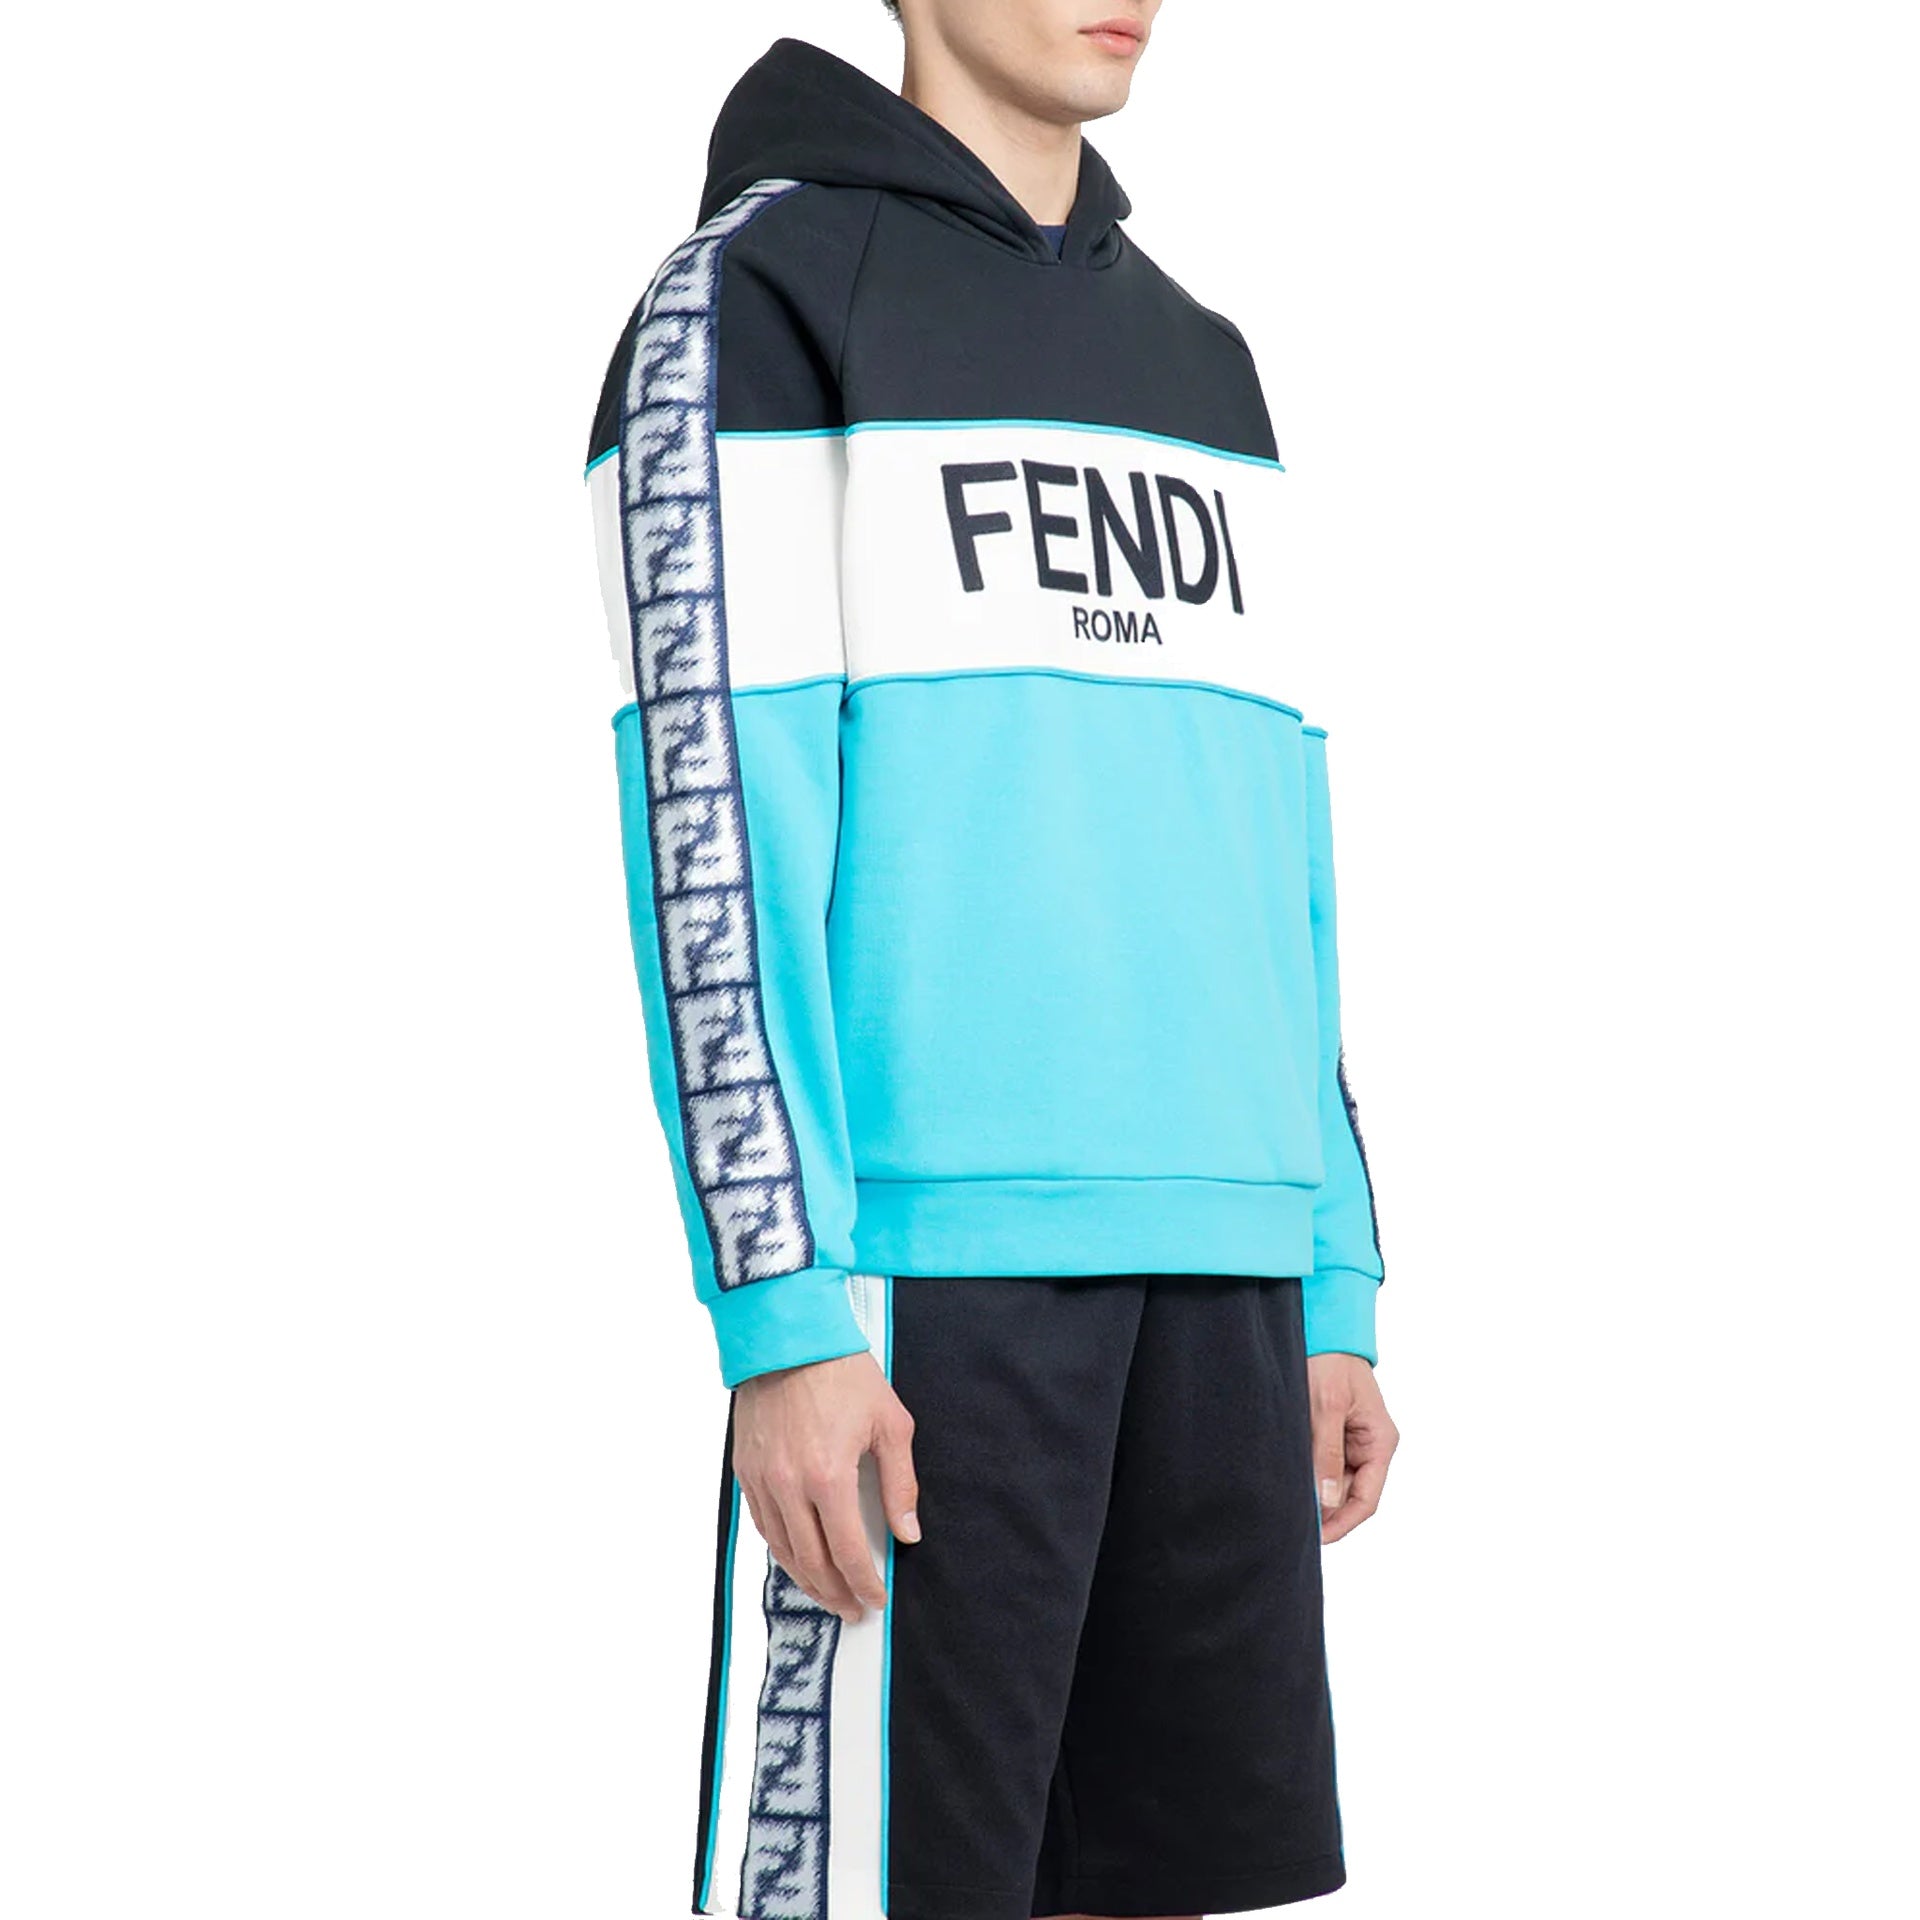 FENDI-OUTLET-SALE-FENDI-Logo-Hooded-Sweatshirt-Shirts-ARCHIVE-COLLECTION-2.jpg